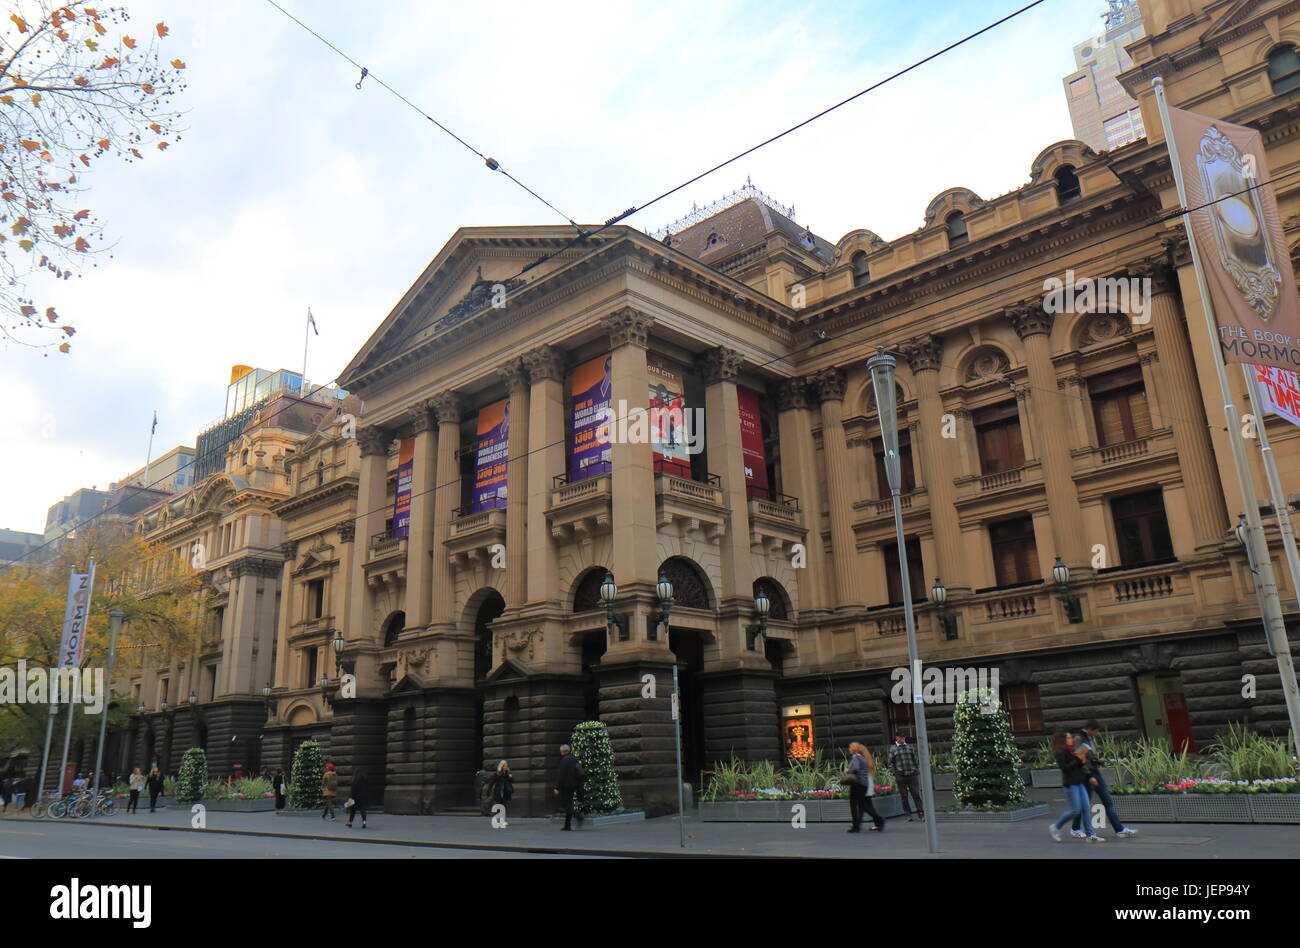 People visit City hall in Melbourne Australia. Stock Photo